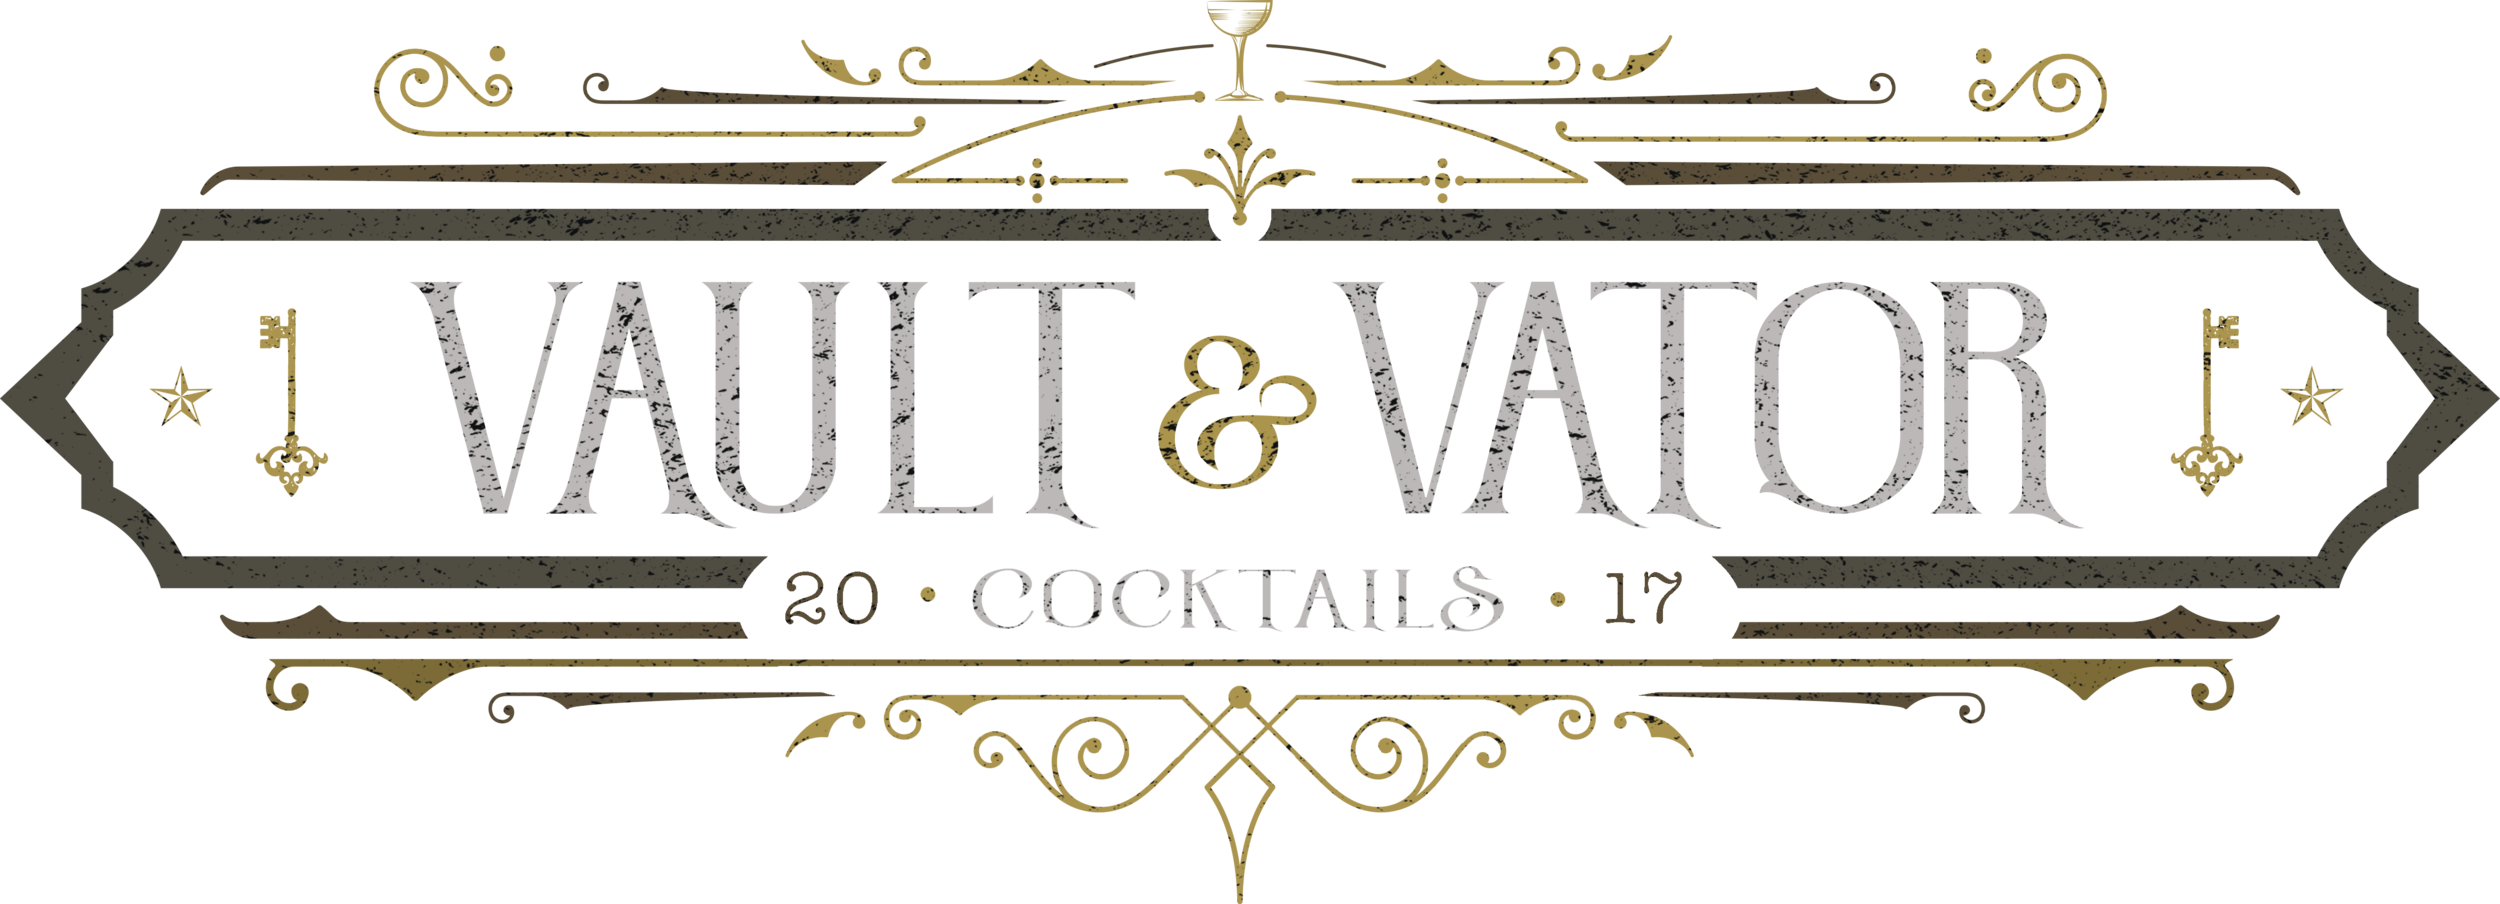 Wine tumbler — Vault & Vator